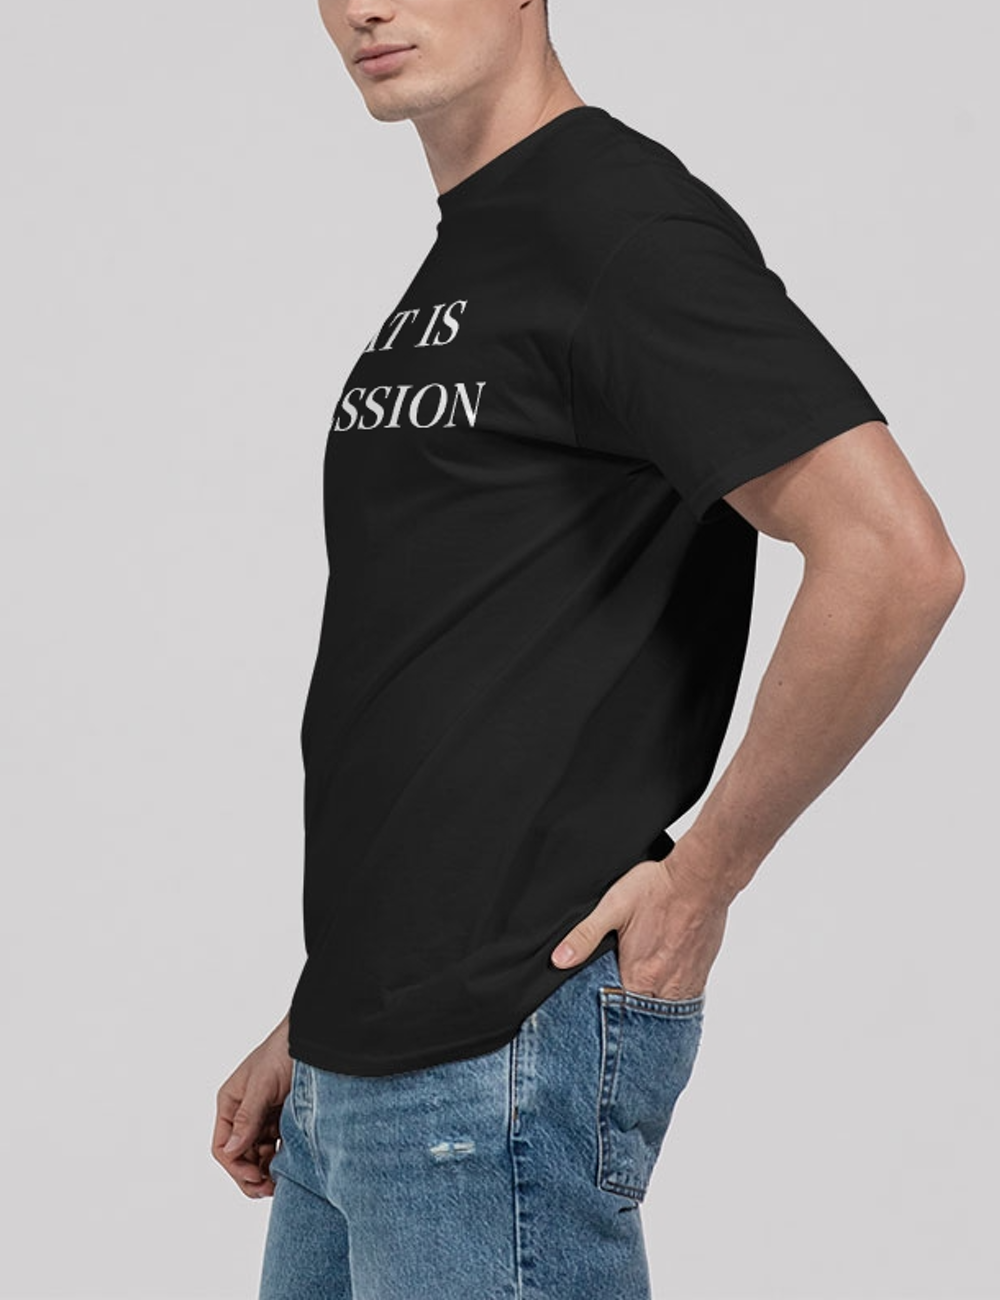 What Is Depression Men's Classic T-Shirt OniTakai